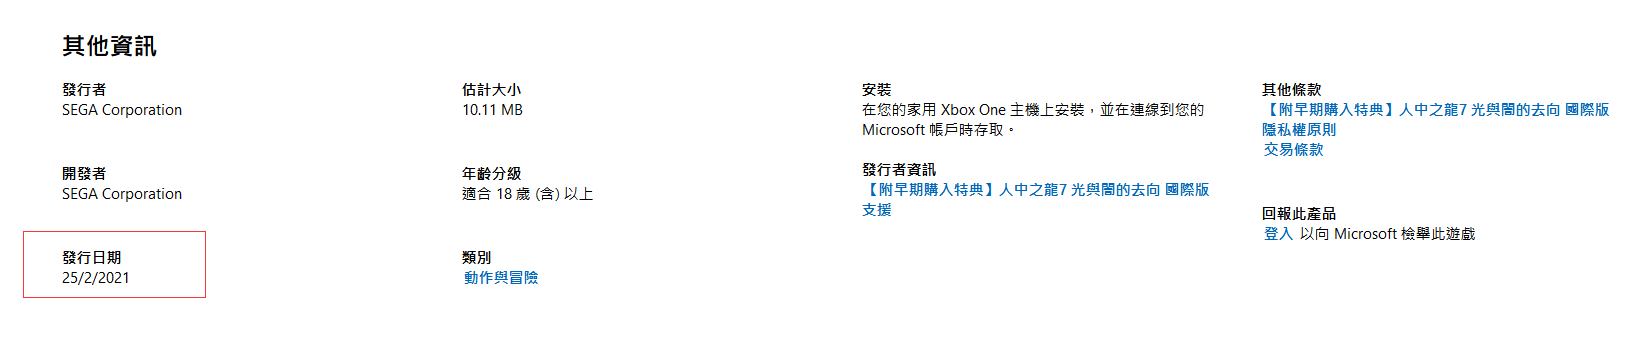 Xbox/Win10《如龙7》国际版2月25日发售 包含中文、早期特典